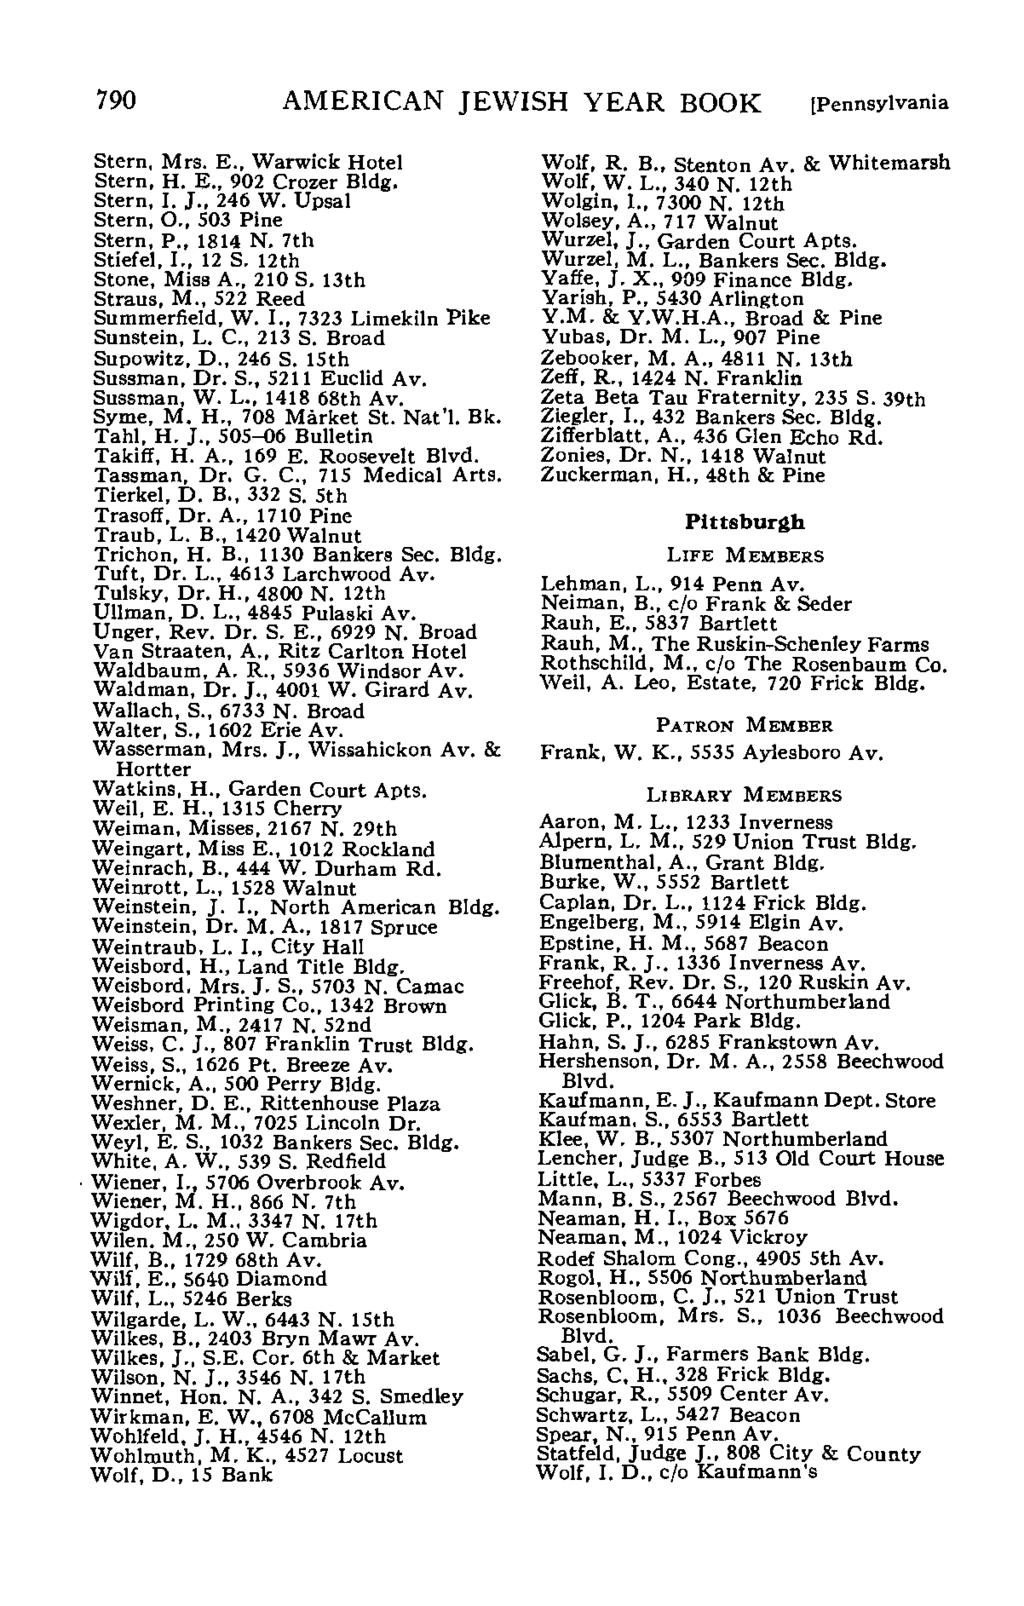 790 AMERICAN JEWISH YEAR BOOK [Pennsylvania Stern, Mrs. E.. Warwick Hotel Stern, H. E., 902 Crozer Bldg. Stern, I. J., 246 W. Upsal Stern, O., 503 Pine Stern, P., 1814 N. 7th Stiefel, I., 12 S.